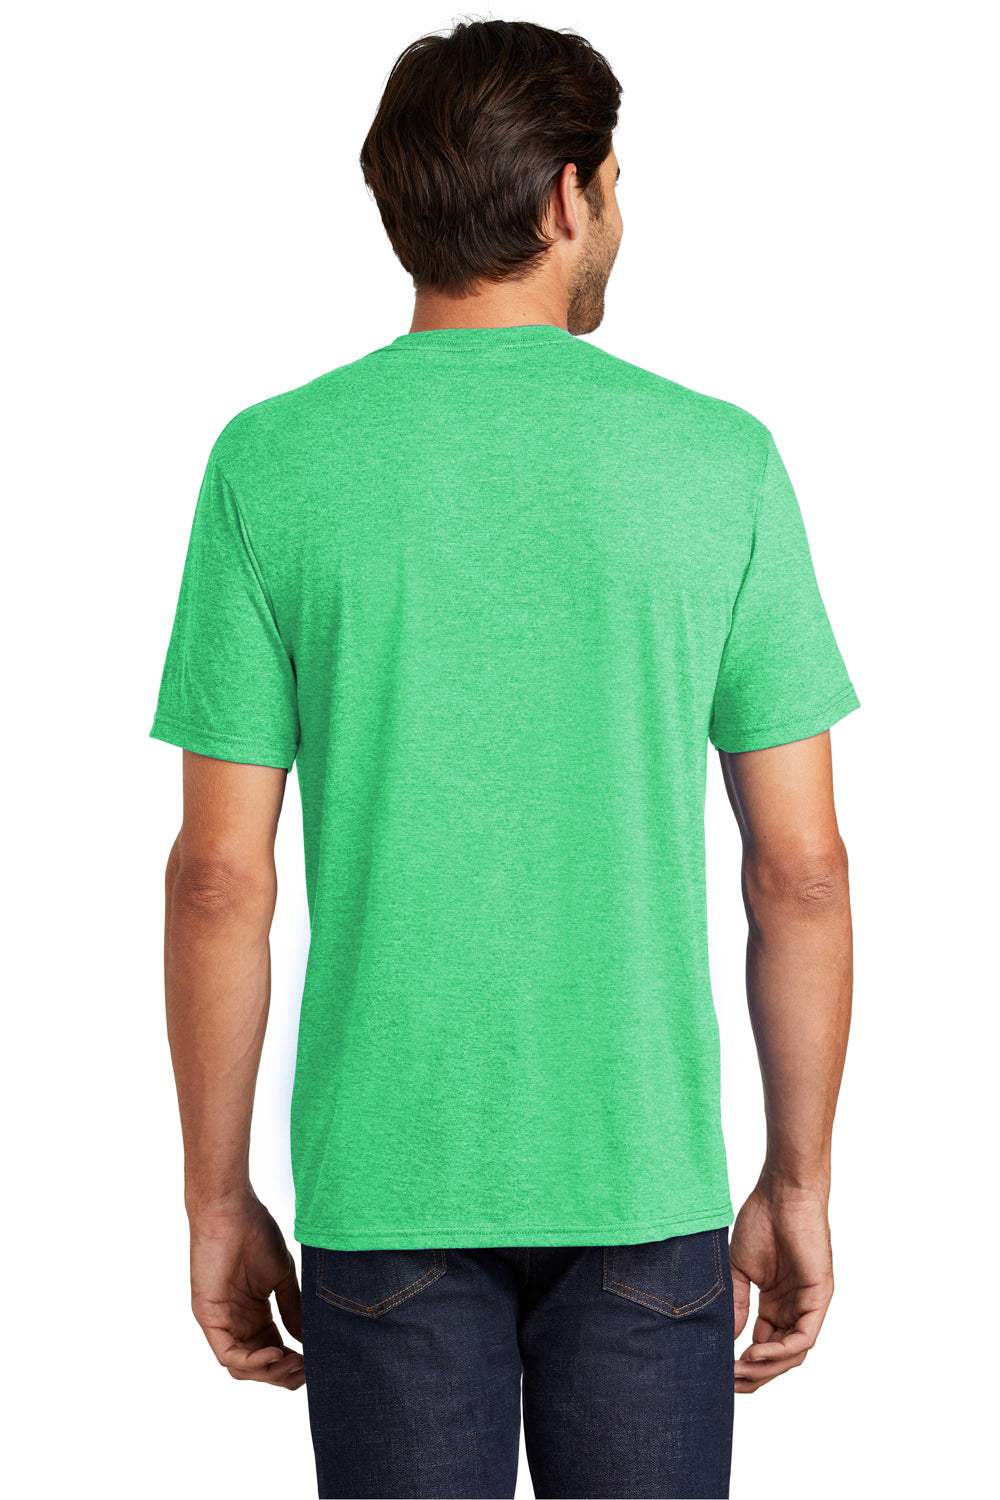 District DM130 Mens Perfect Tri Short Sleeve Crewneck T-Shirt Green Frost Back